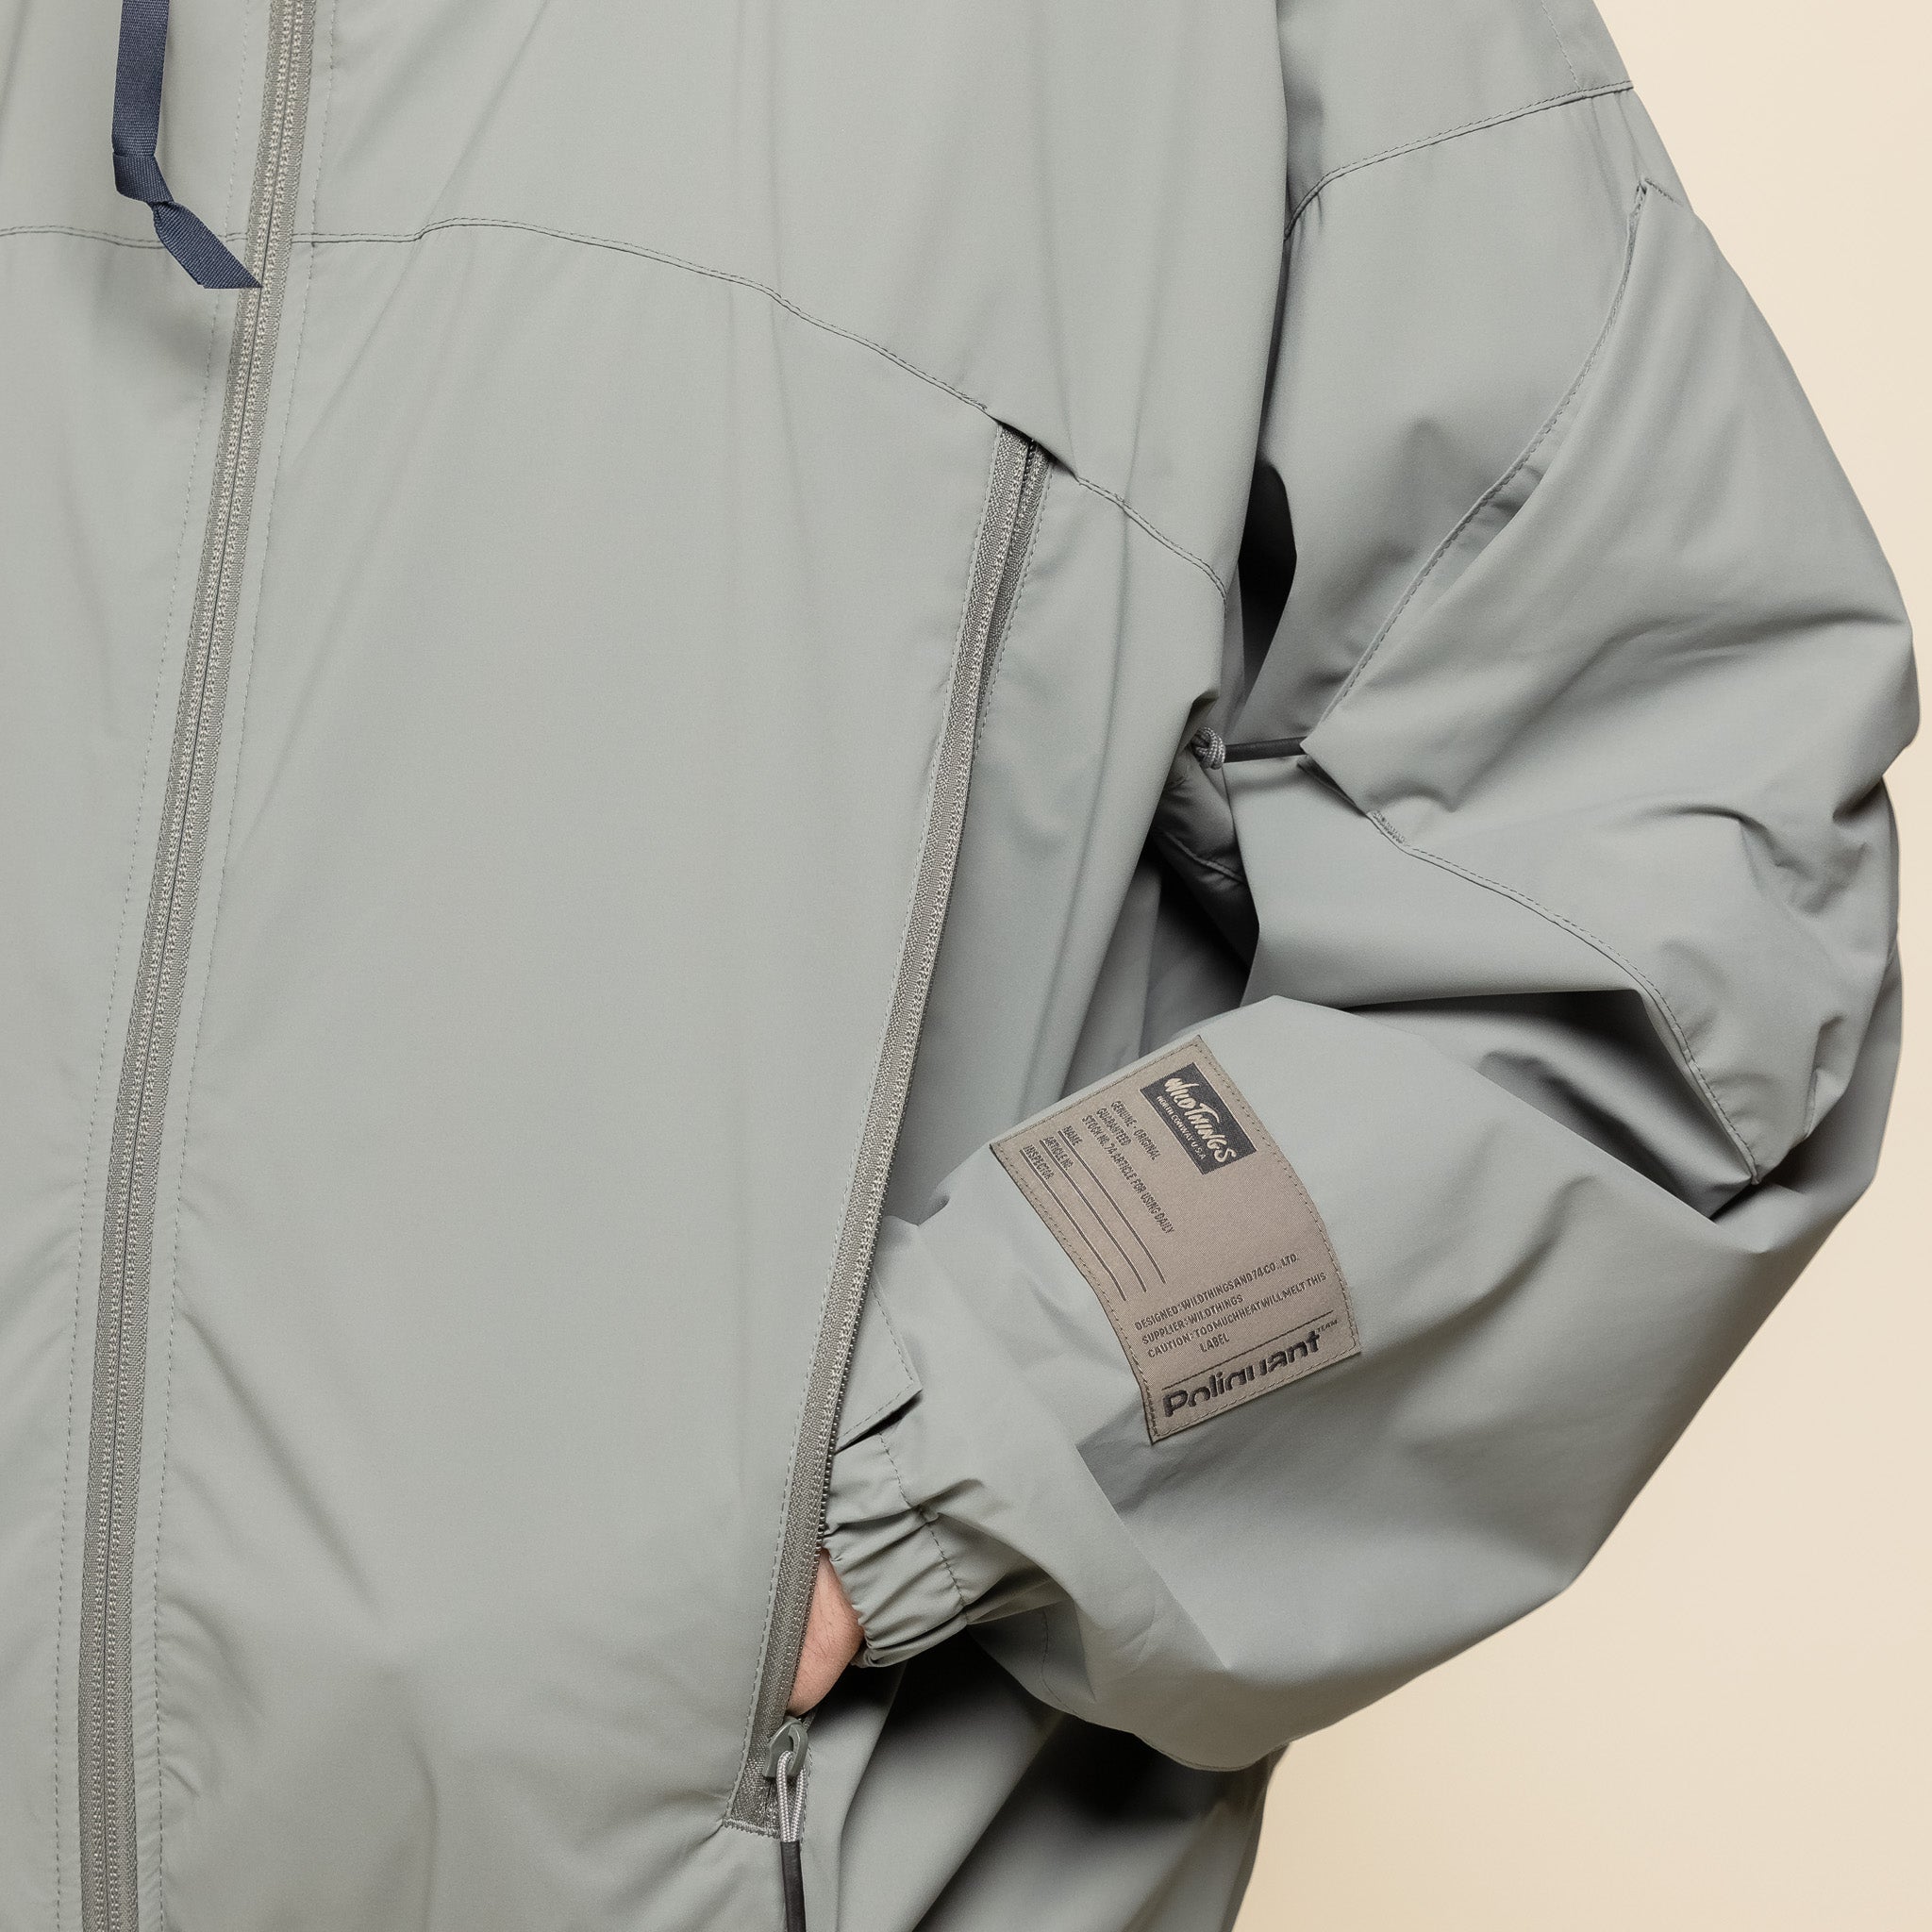 Poliquant - Protected Common Uniform Hooded Jacket - Grey Green "poliquant stockists" "poliquant website" "poliquant jacket"  Edit alt text